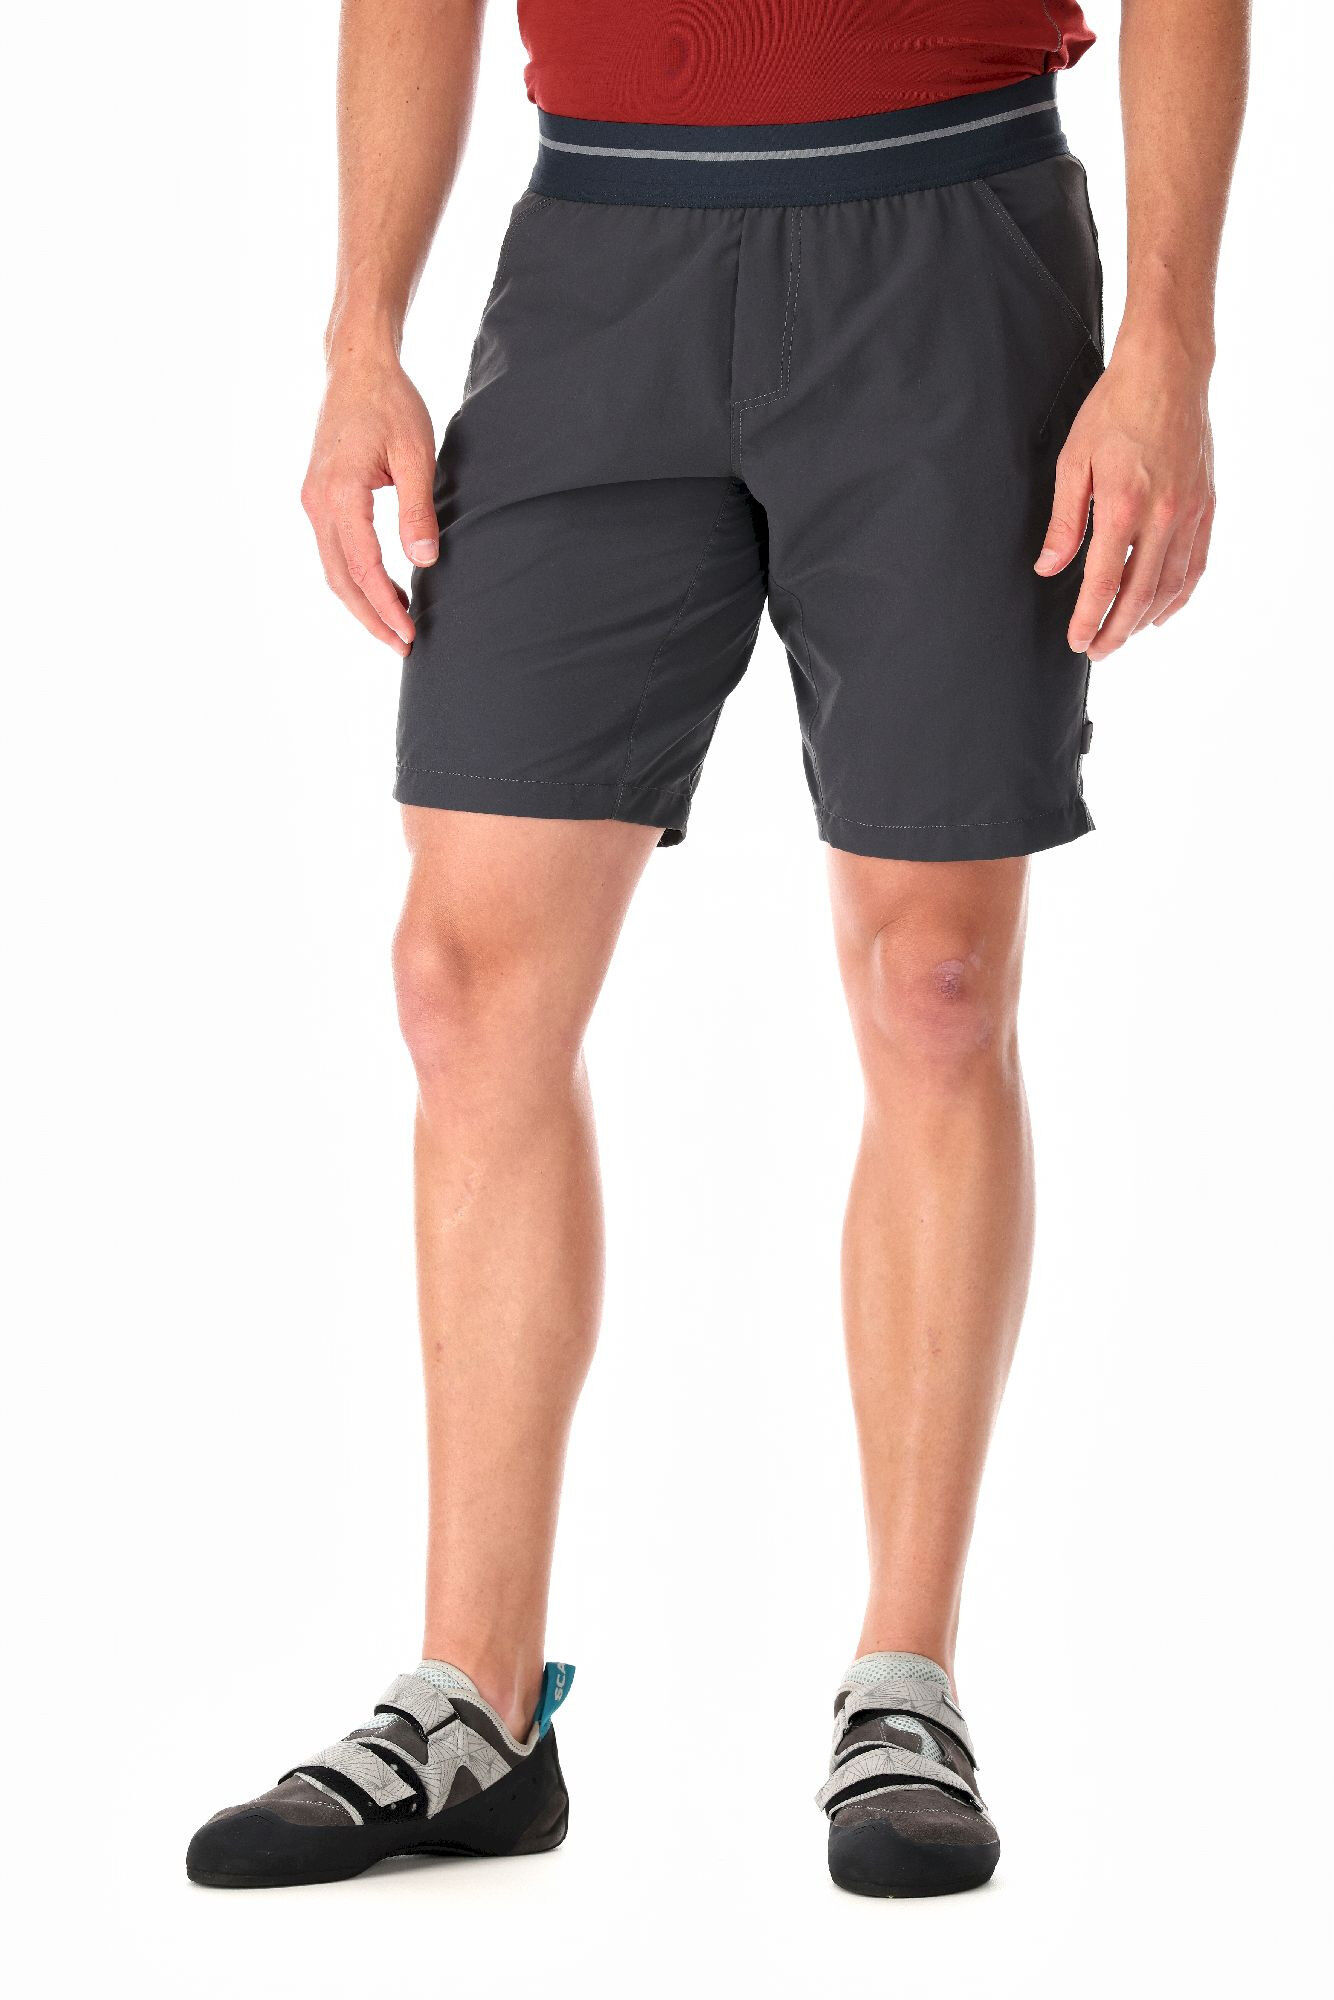 Rab Obtuse Shorts - Climbing shorts - Men's | Hardloop